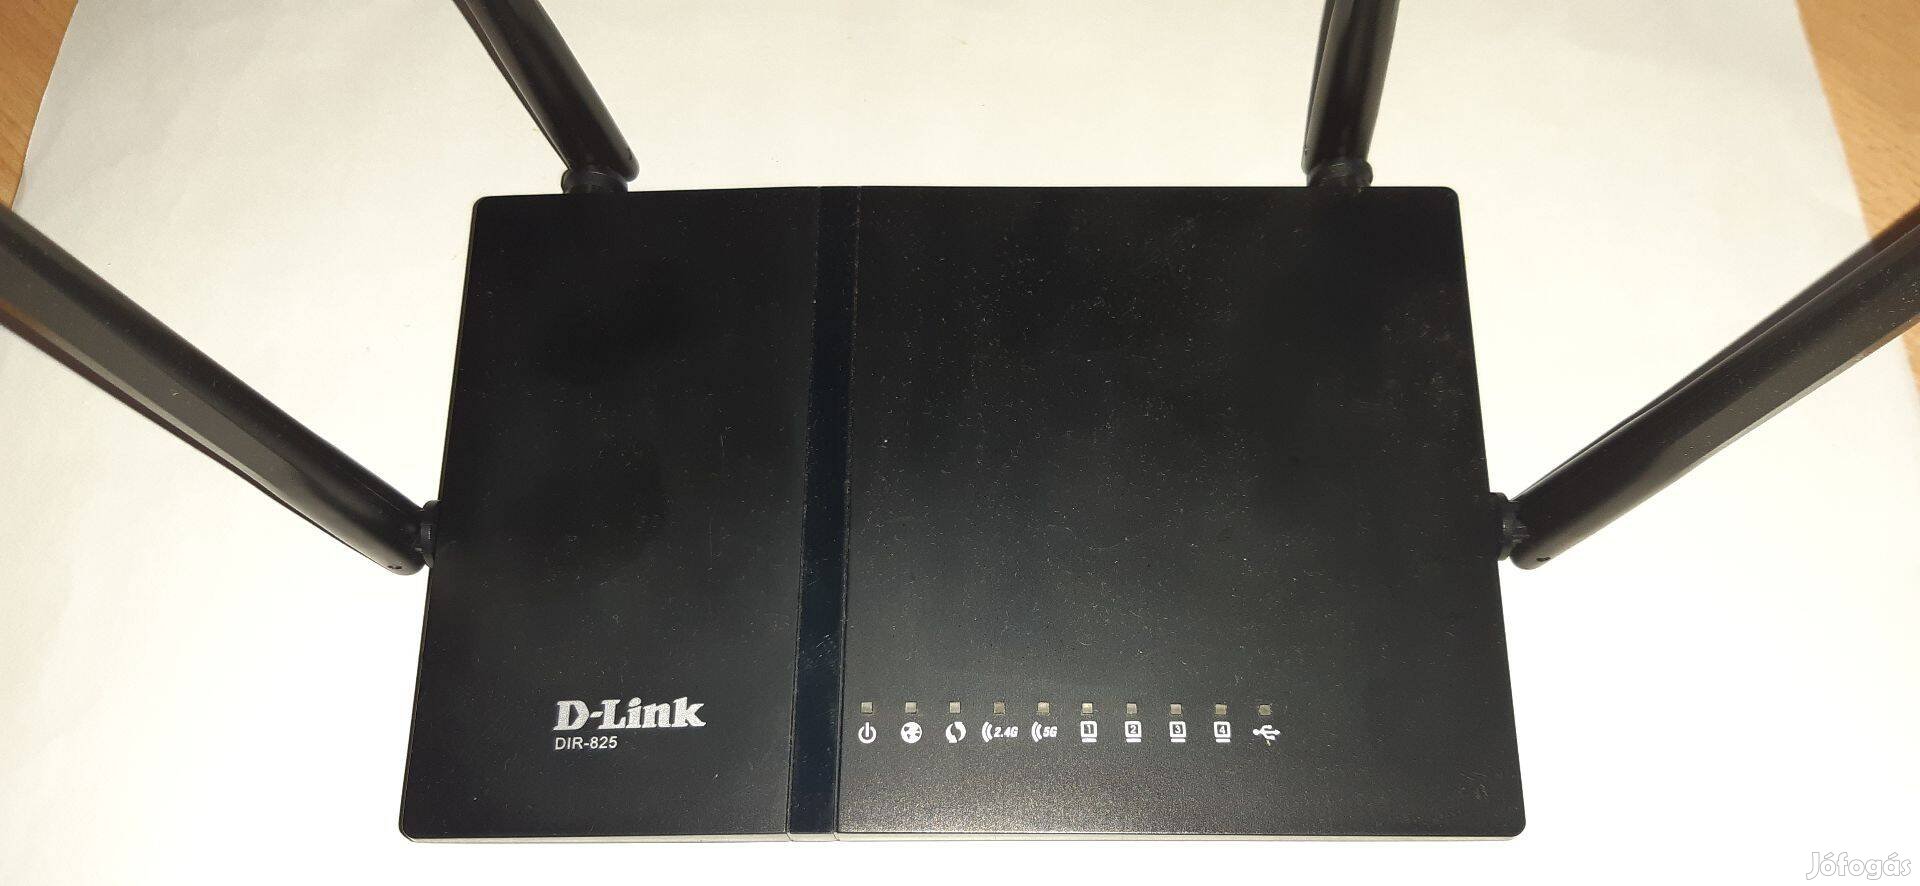 D-Link DIR-825 Dual Band Gigabit Router